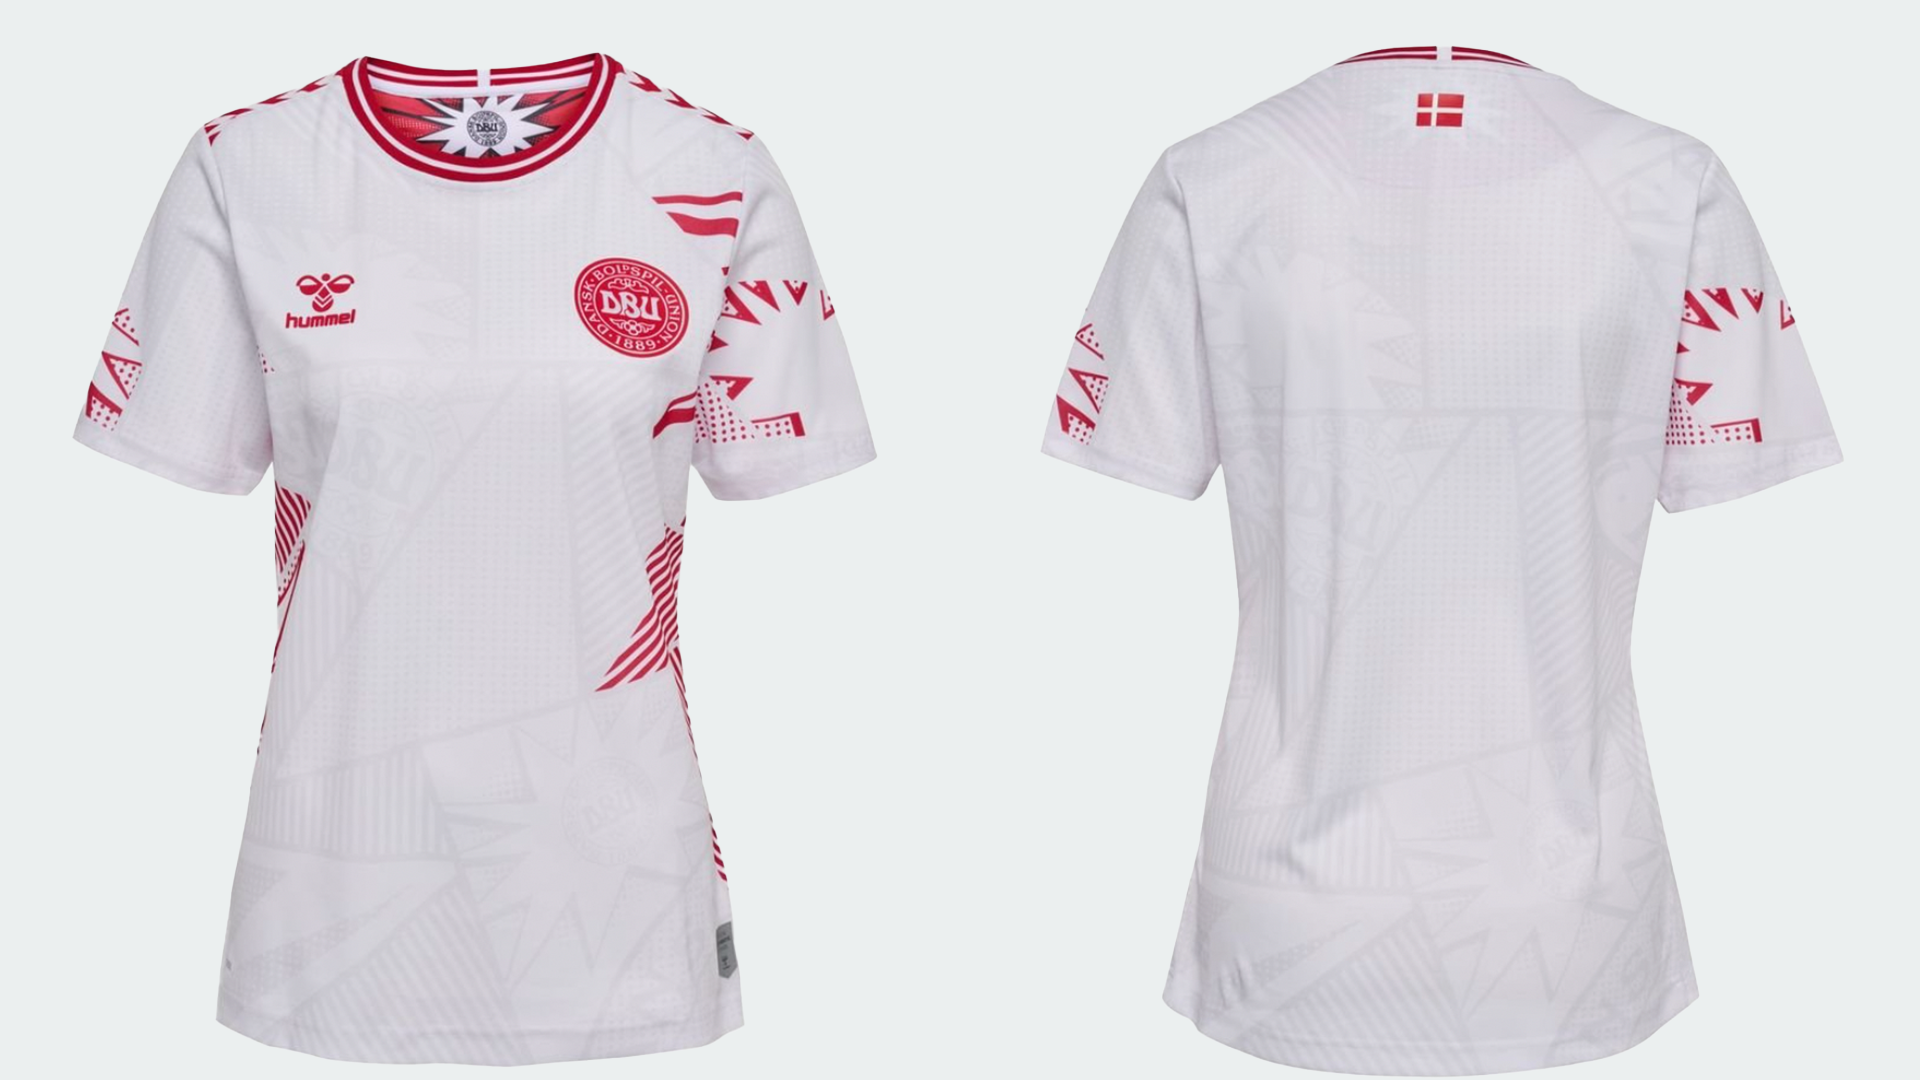 Danish football culture's shirts